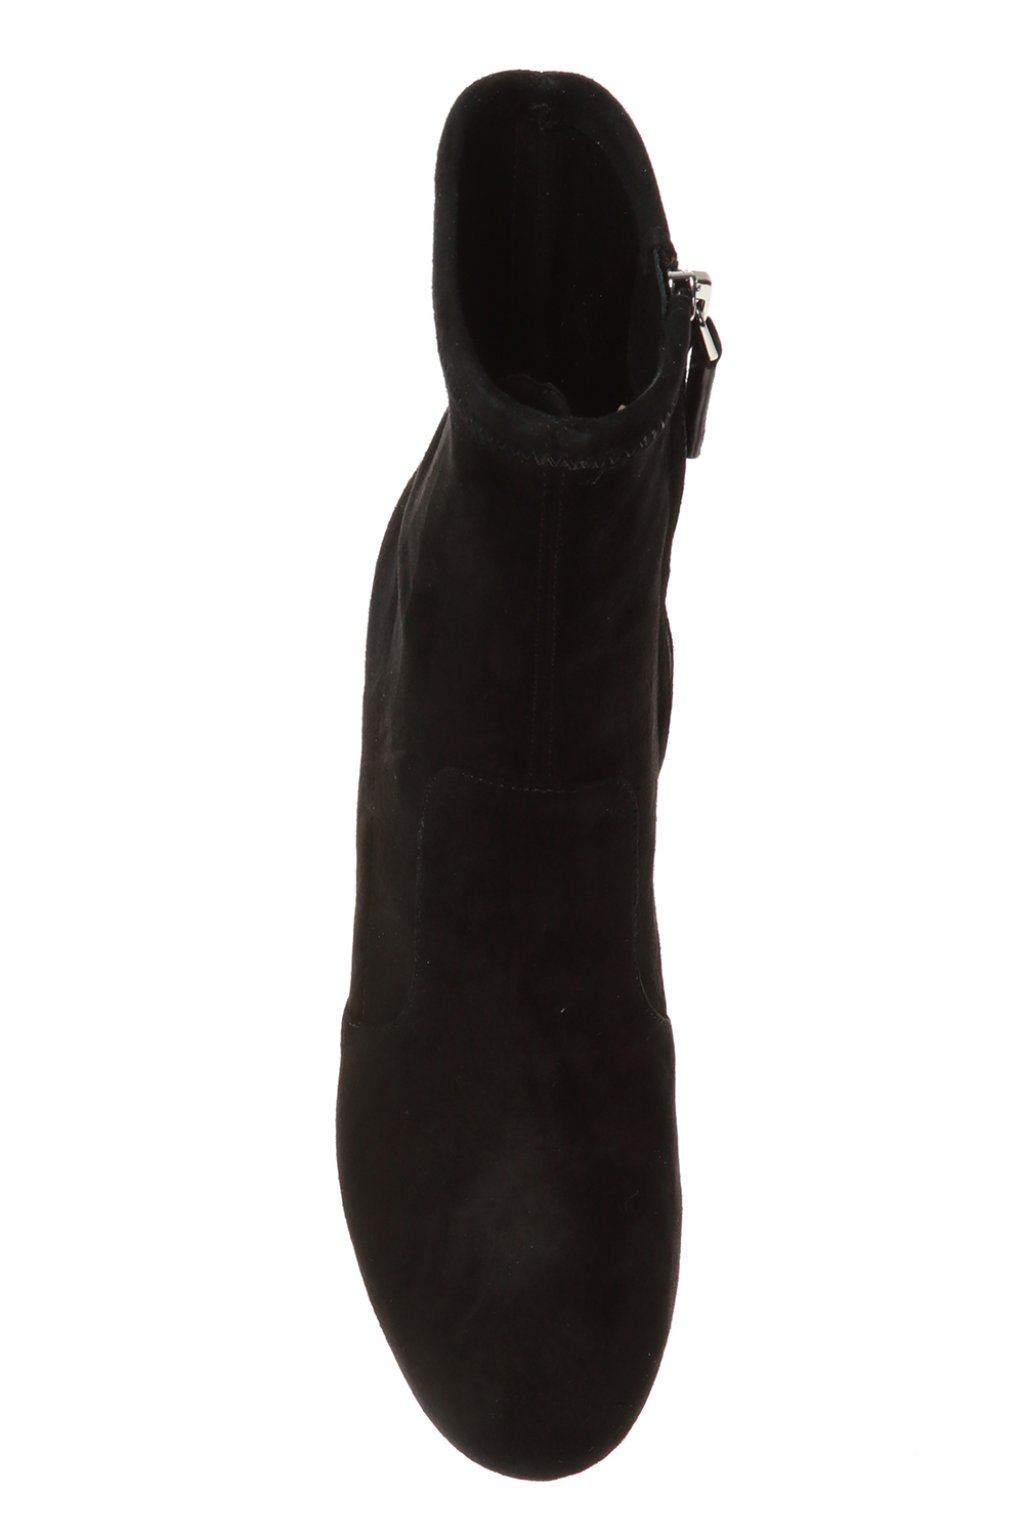 Black 'Gigi' suede ankle boots Tory Burch - Vitkac France